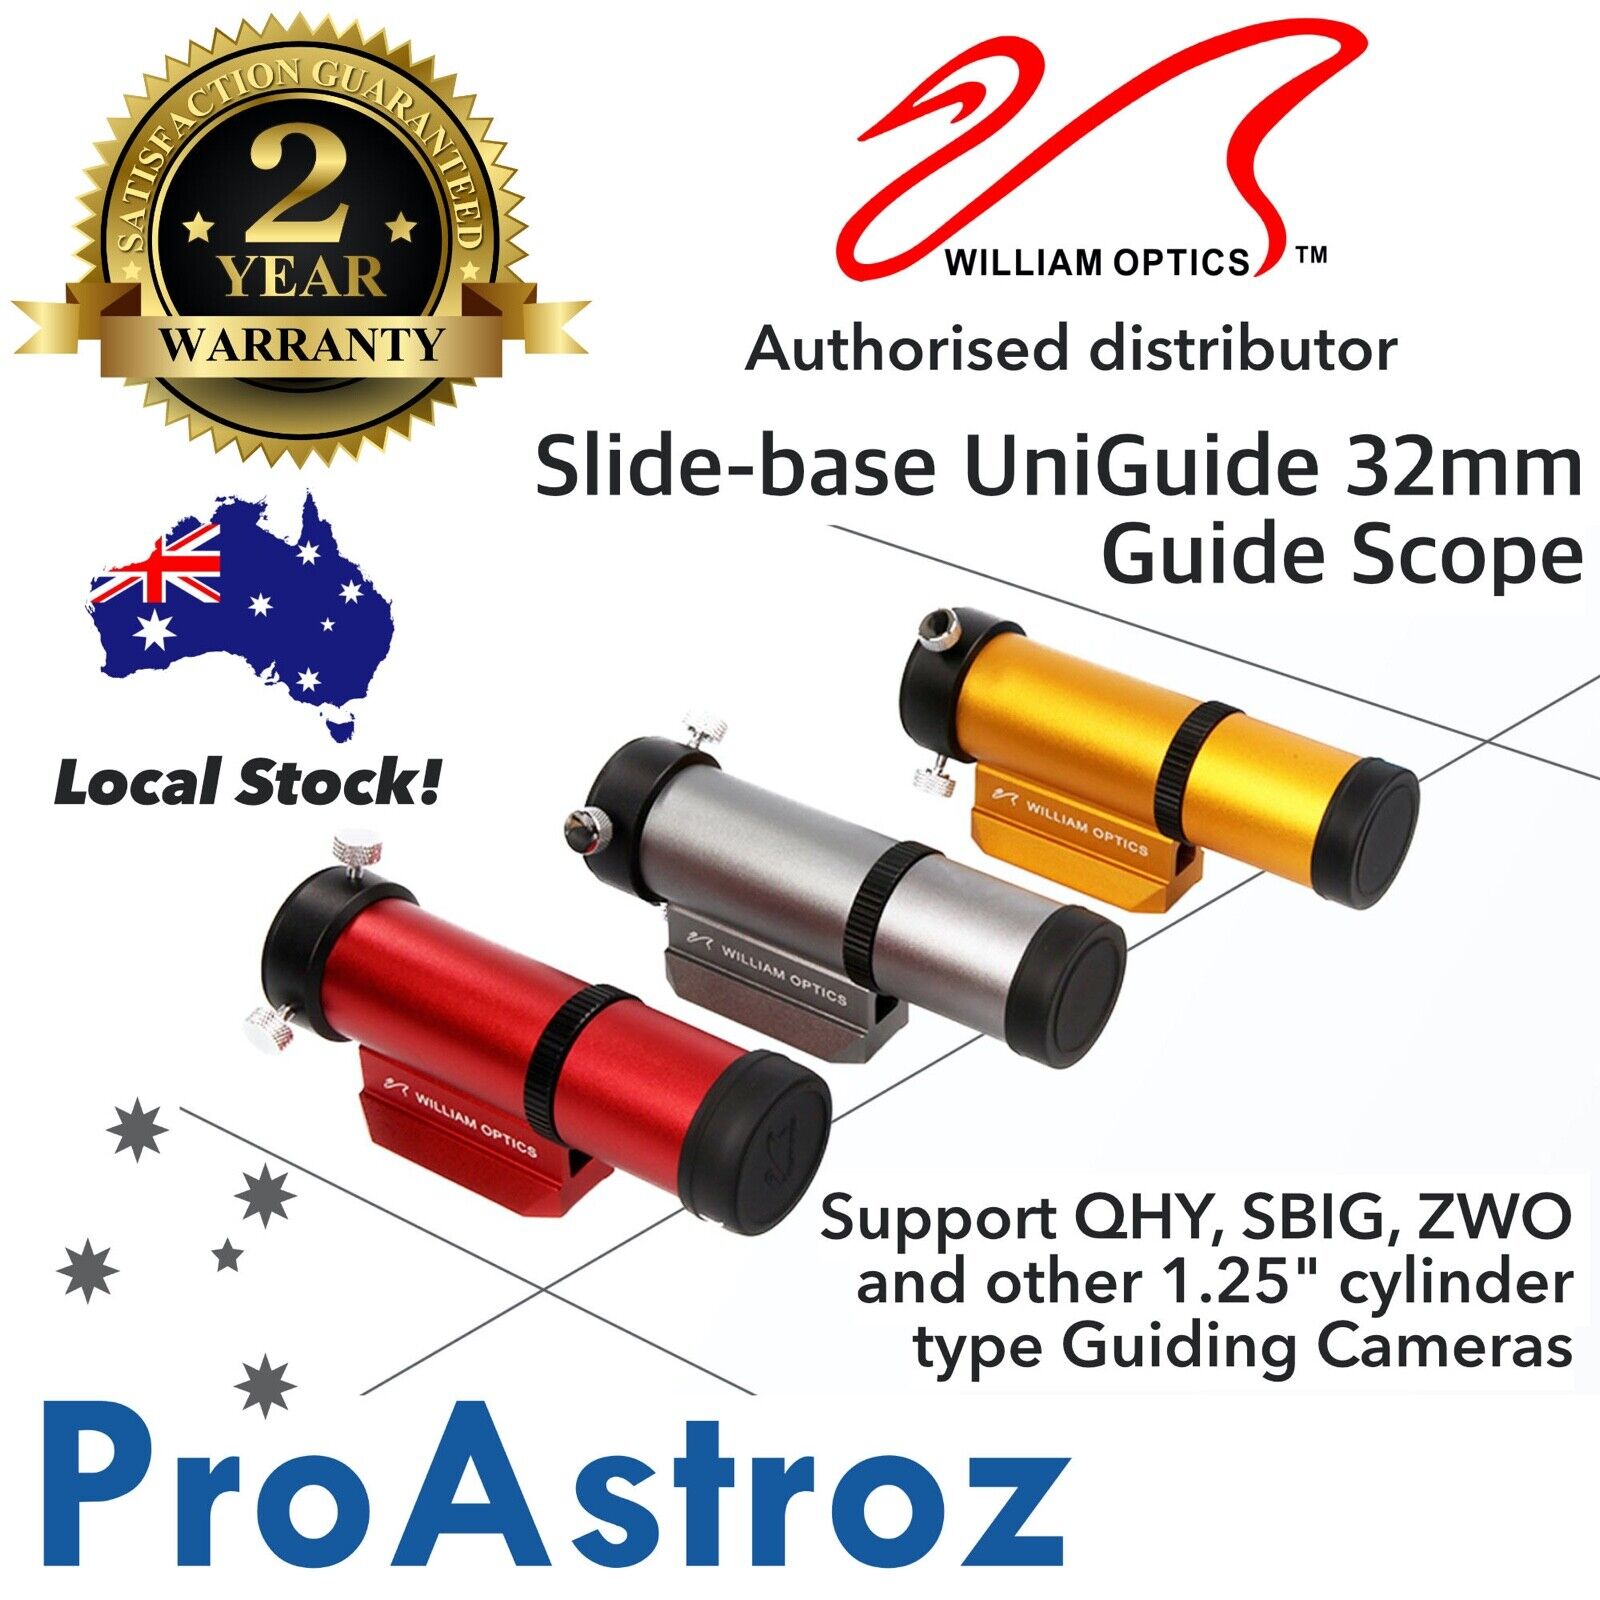 William Optics Slide-base UniGuide 32mm Guide Scope for QHY, SBIG, ZWO cameras